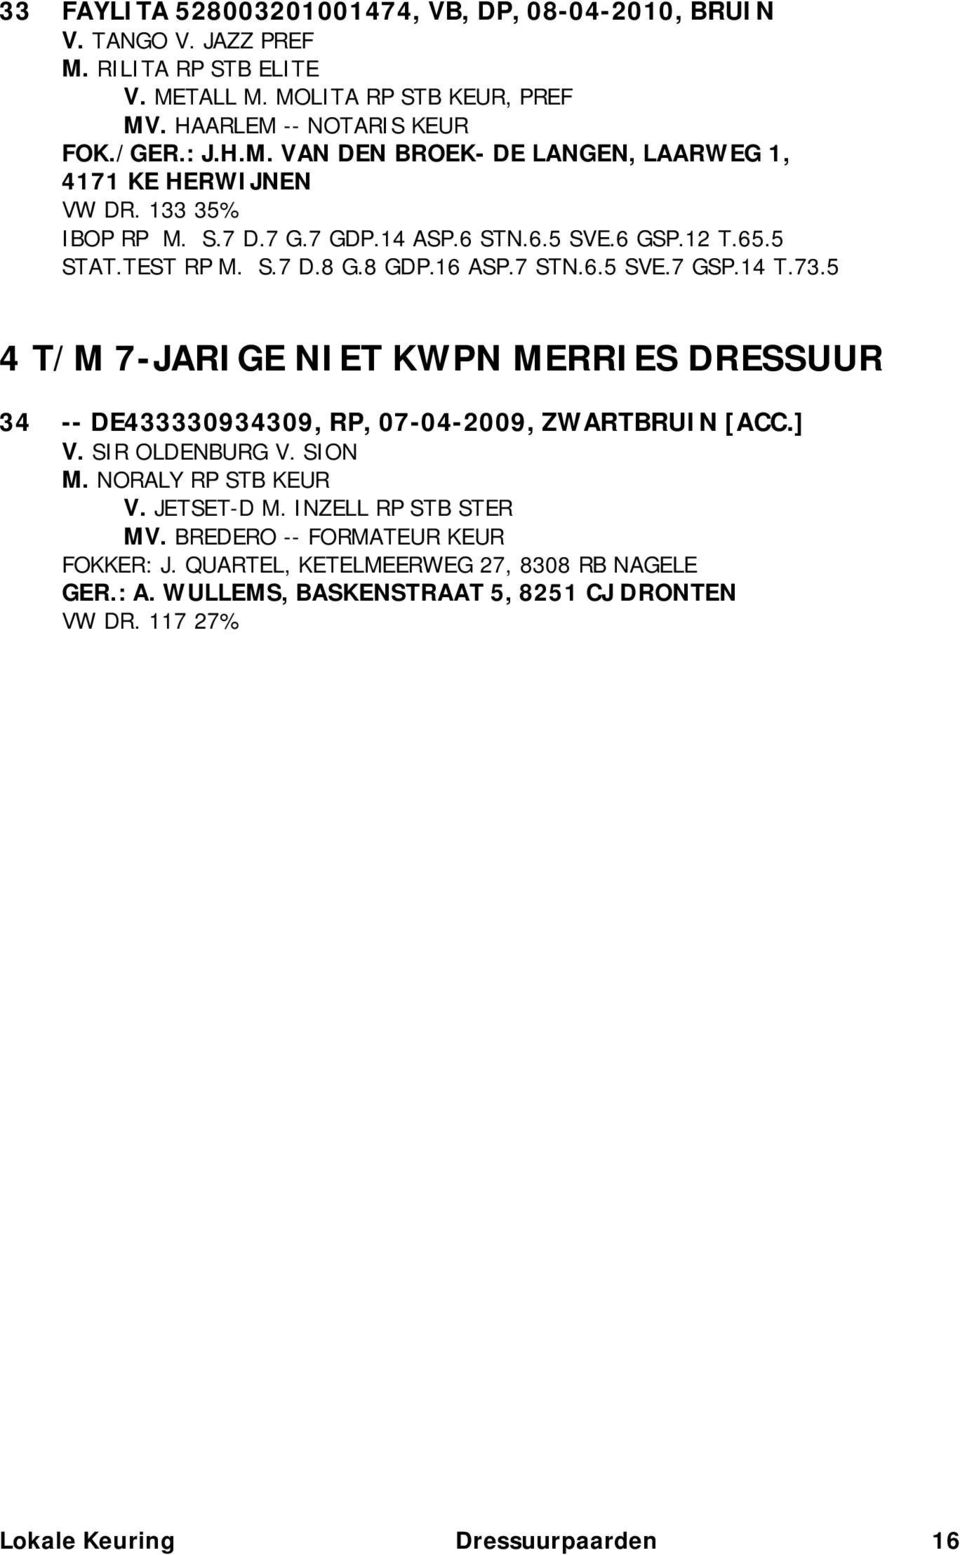 5 4 T/M 7-JARIGE NIET KWPN MERRIES DRESSUUR 34 -- DE433330934309, RP, 07-04-2009, ZWARTBRUIN [ACC.] V. SIR OLDENBURG V. SION M. NORALY RP STB KEUR V. JETSET-D M. INZELL RP STB STER MV.